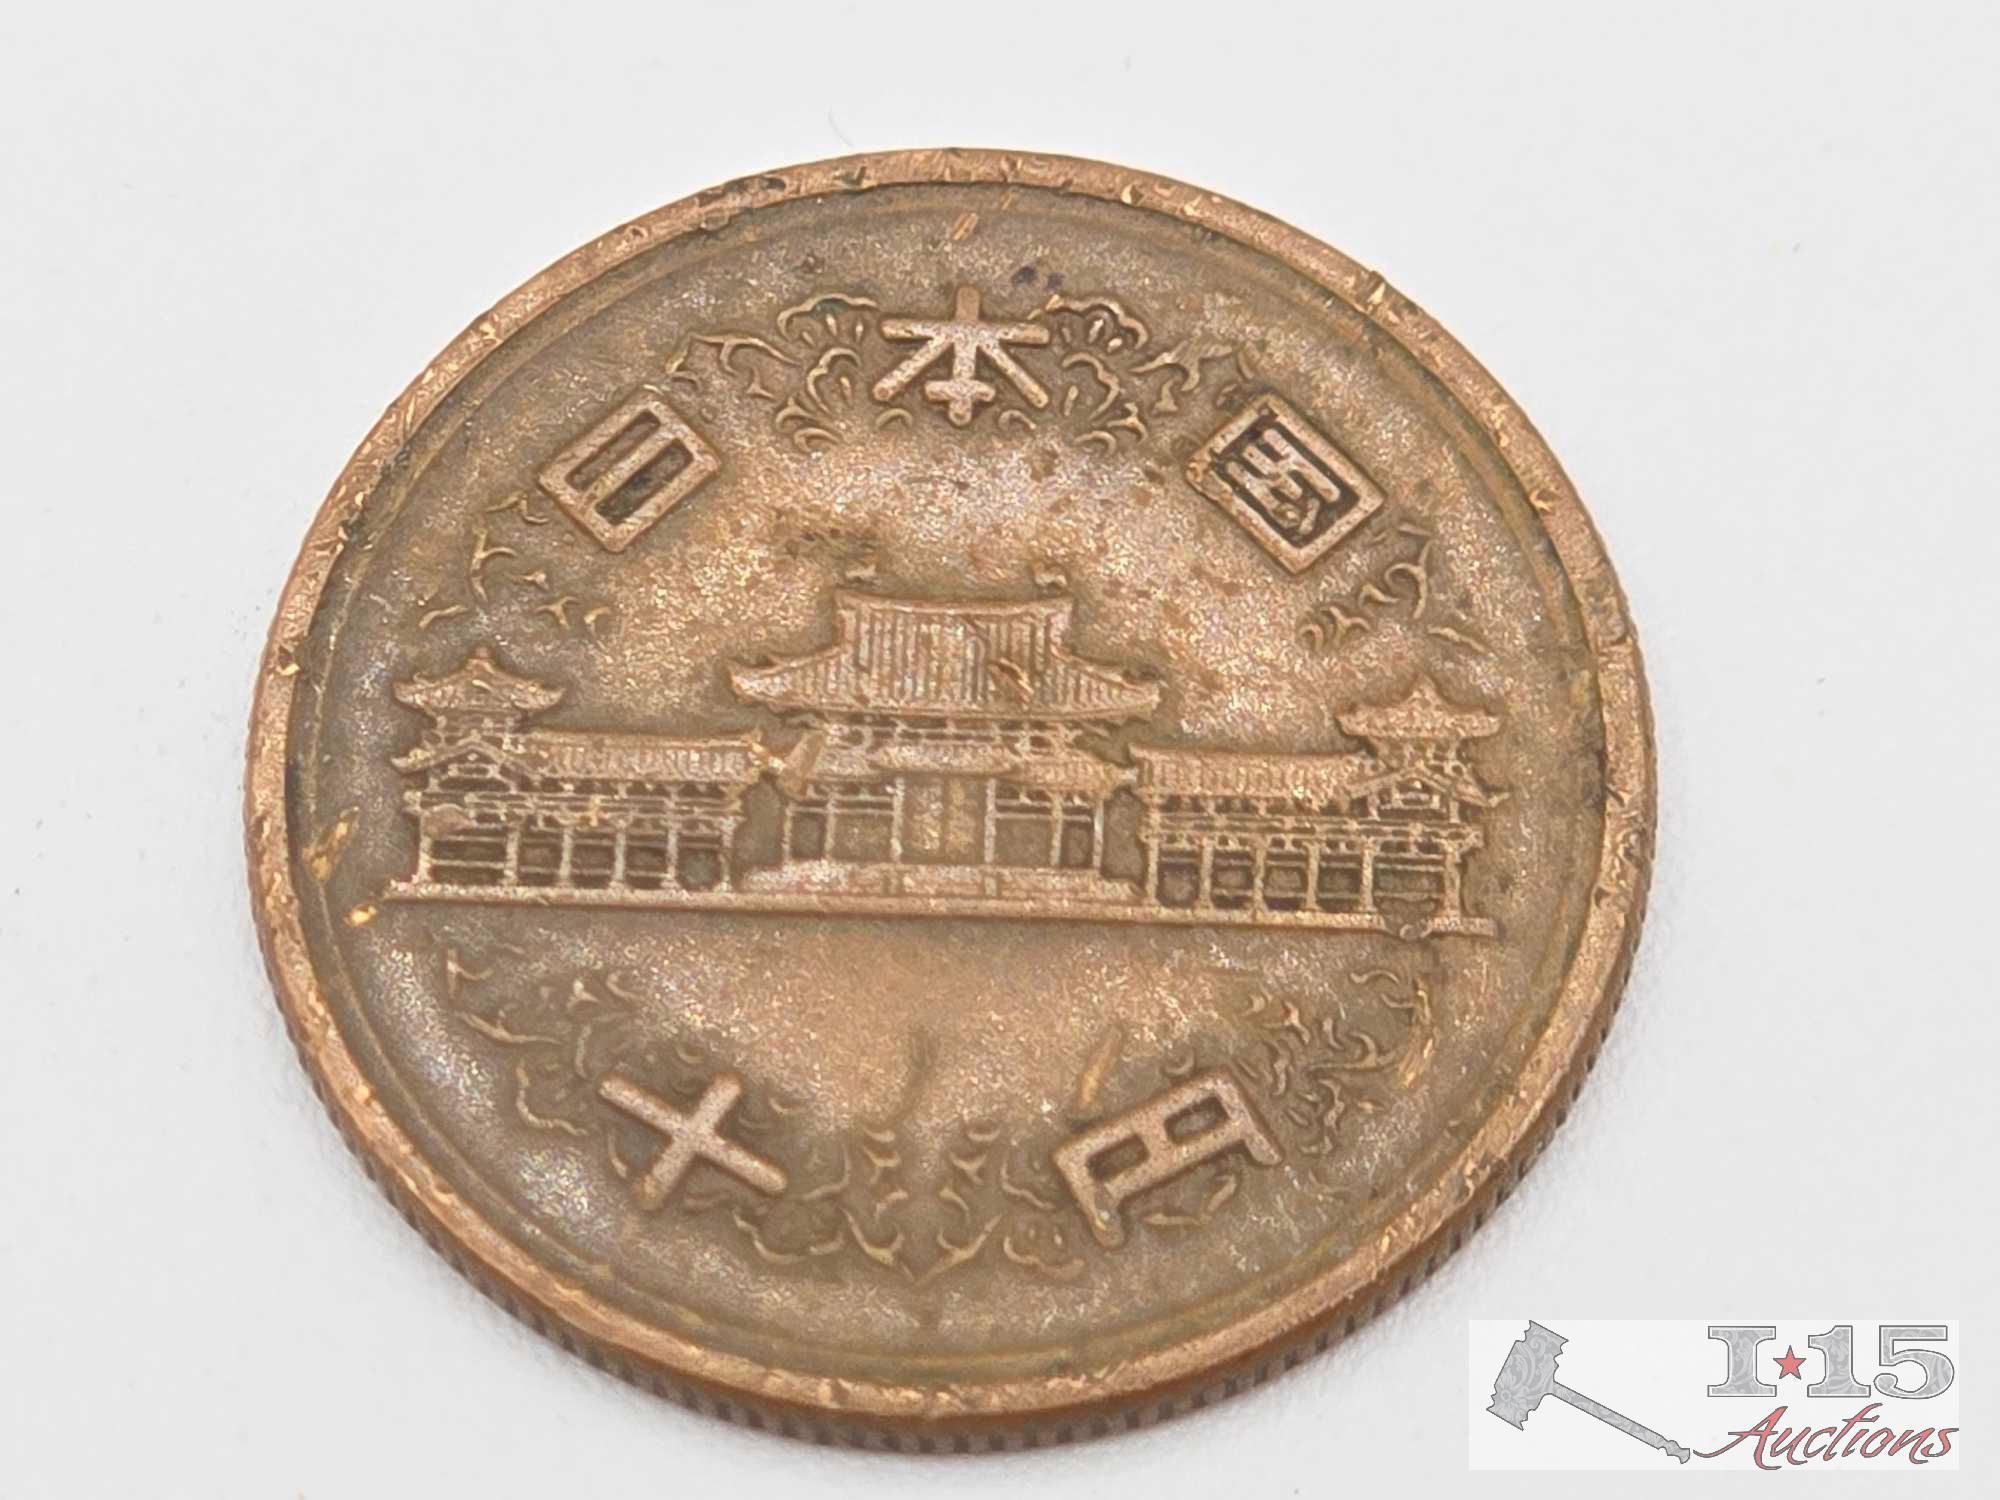 Japan 10 Yen Coin & Small Faux Gold Horse